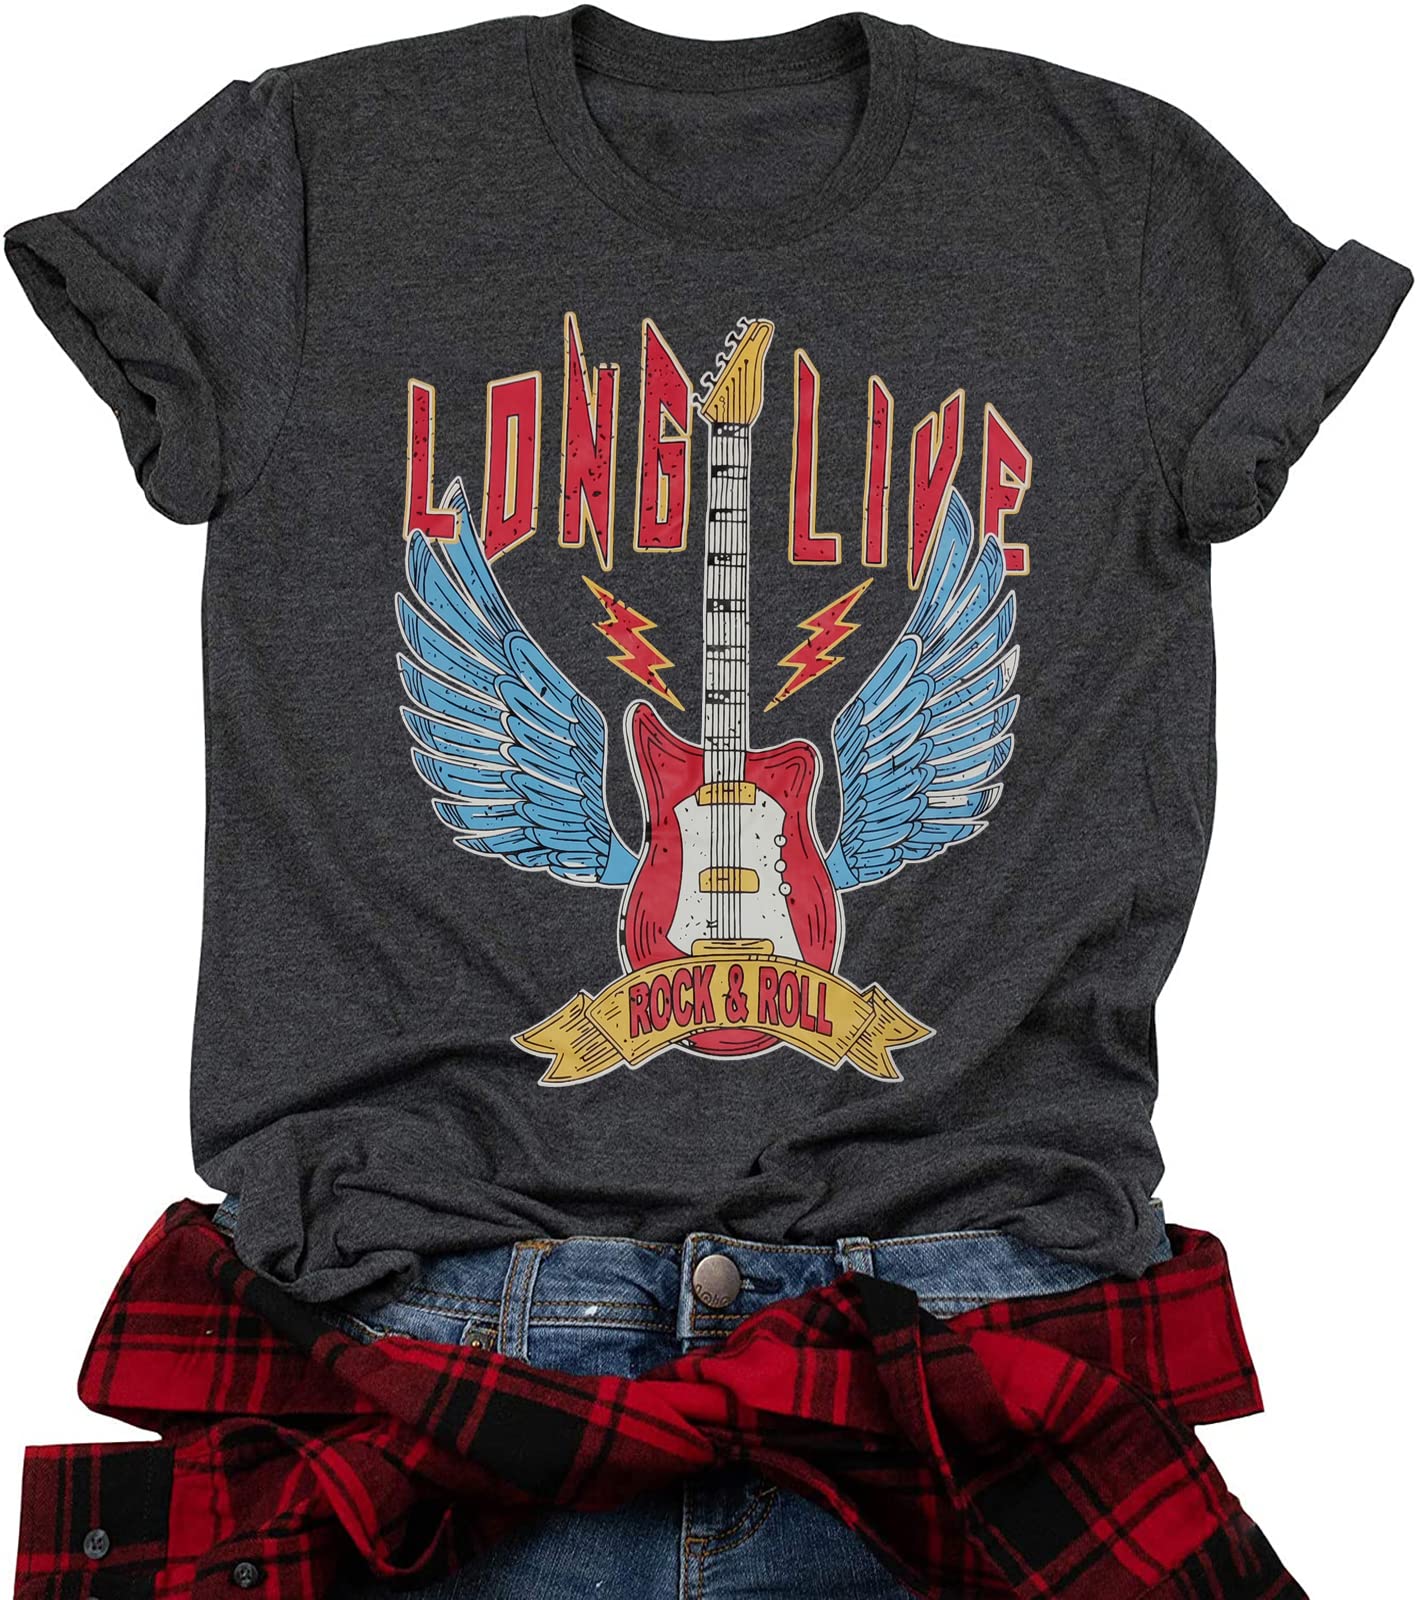 Rock & Roll T Shirt for Women Fashion Rock Music Graphic Tees Shirt Casual Country Music Rock Concert Band Shirt Top